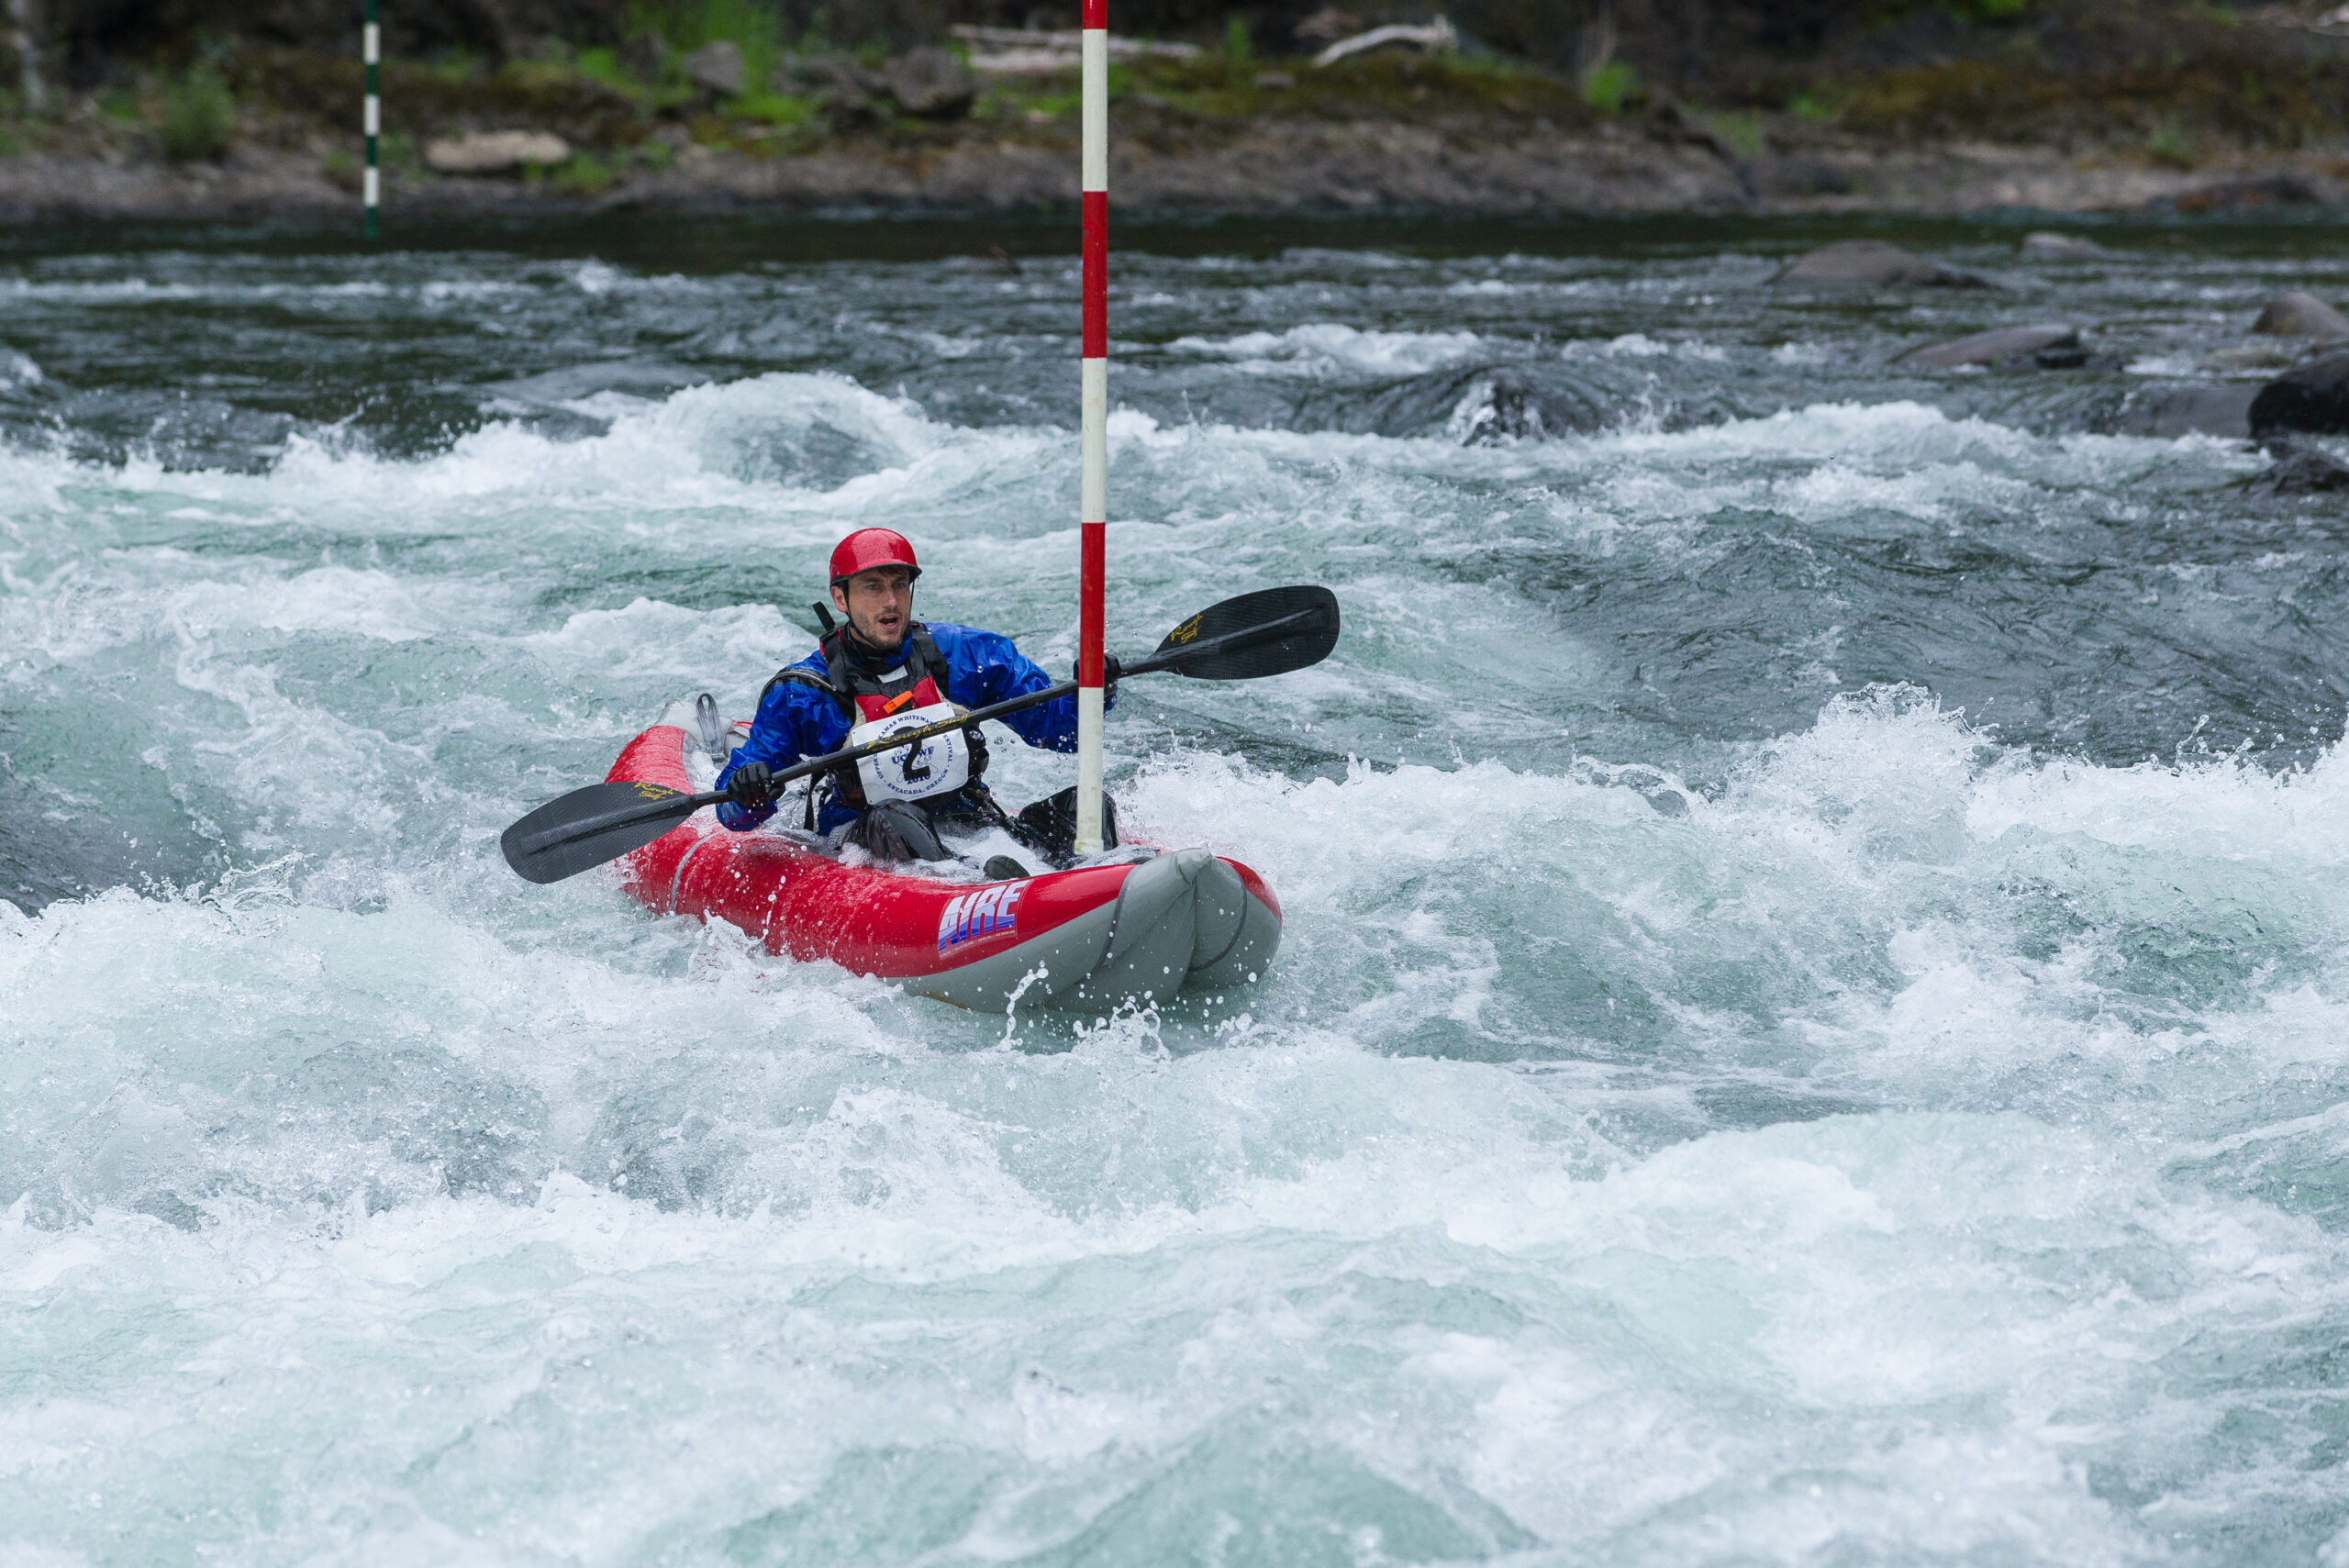 Recretec Inflatable Kayak Mass Start Slalom (3 downriver gates required)